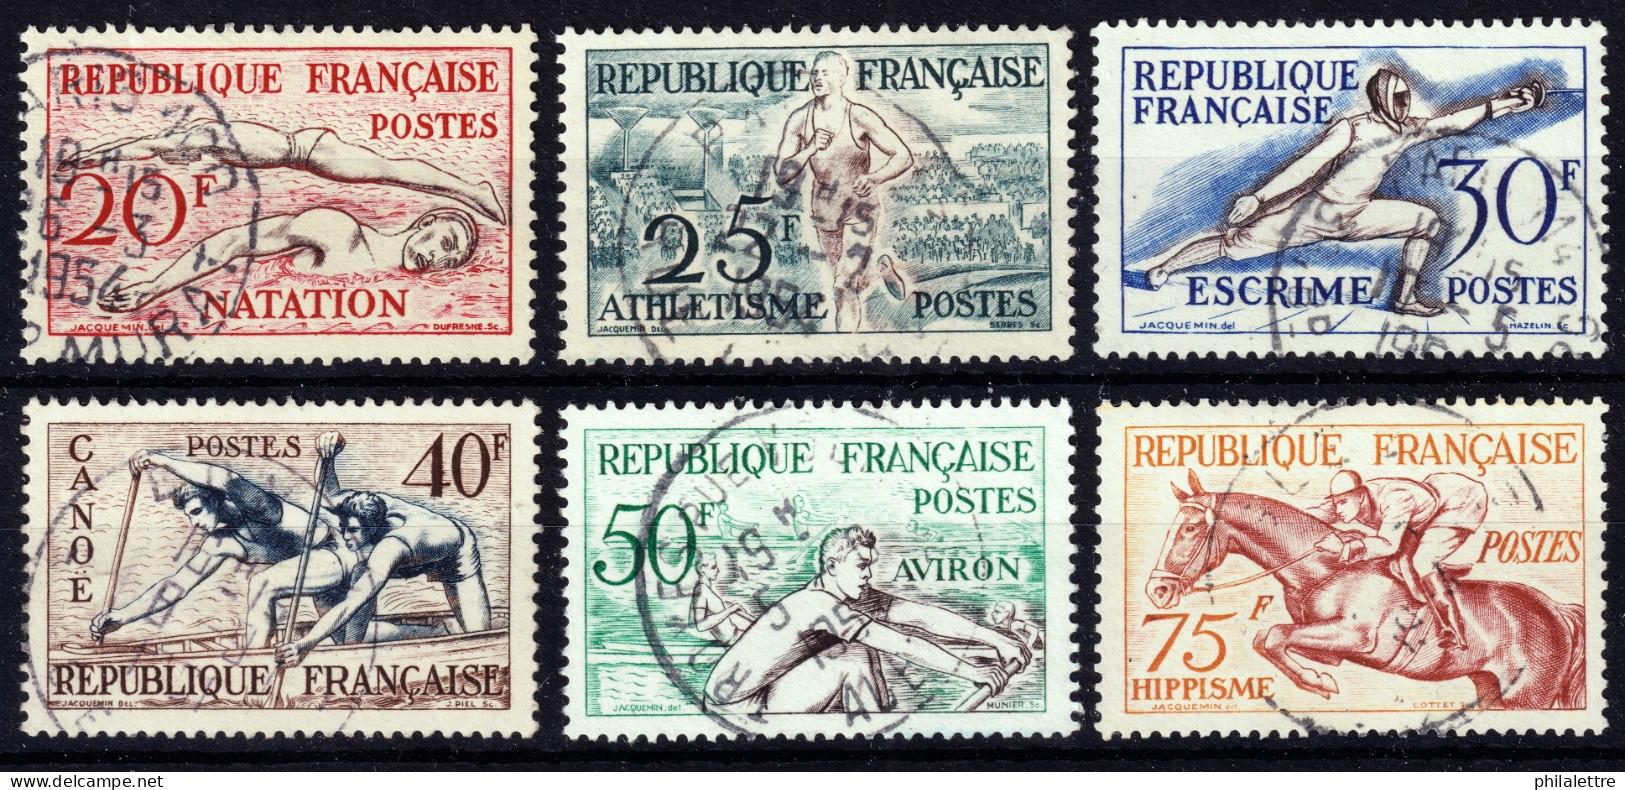 FRANCE - 1953 Yv.960/5 Jeux Olympiques D'Helsinki - Oblitérés TB - Usati